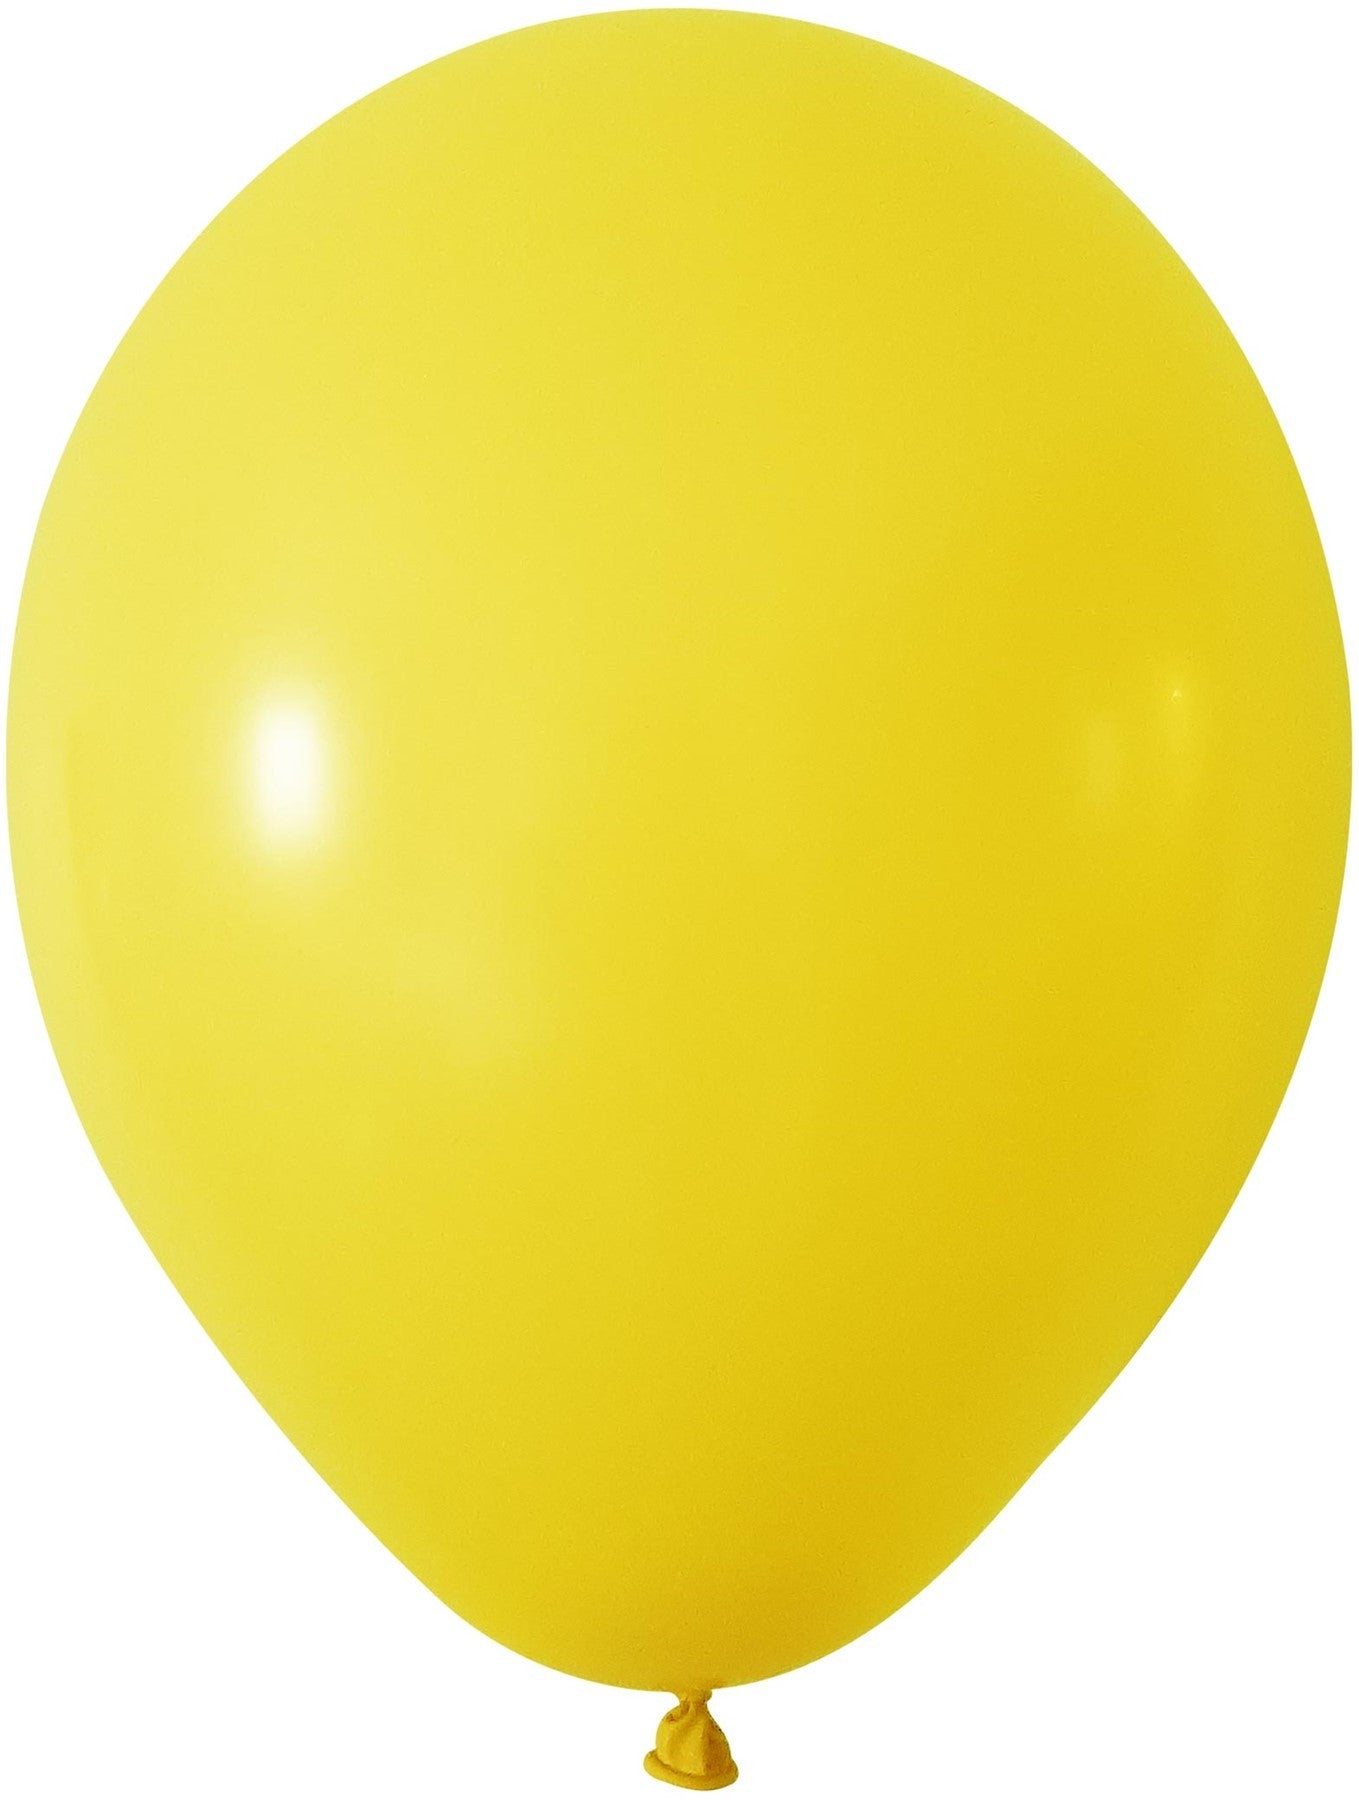 View Yellow Latex Balloon 12 inch Pk 100 information